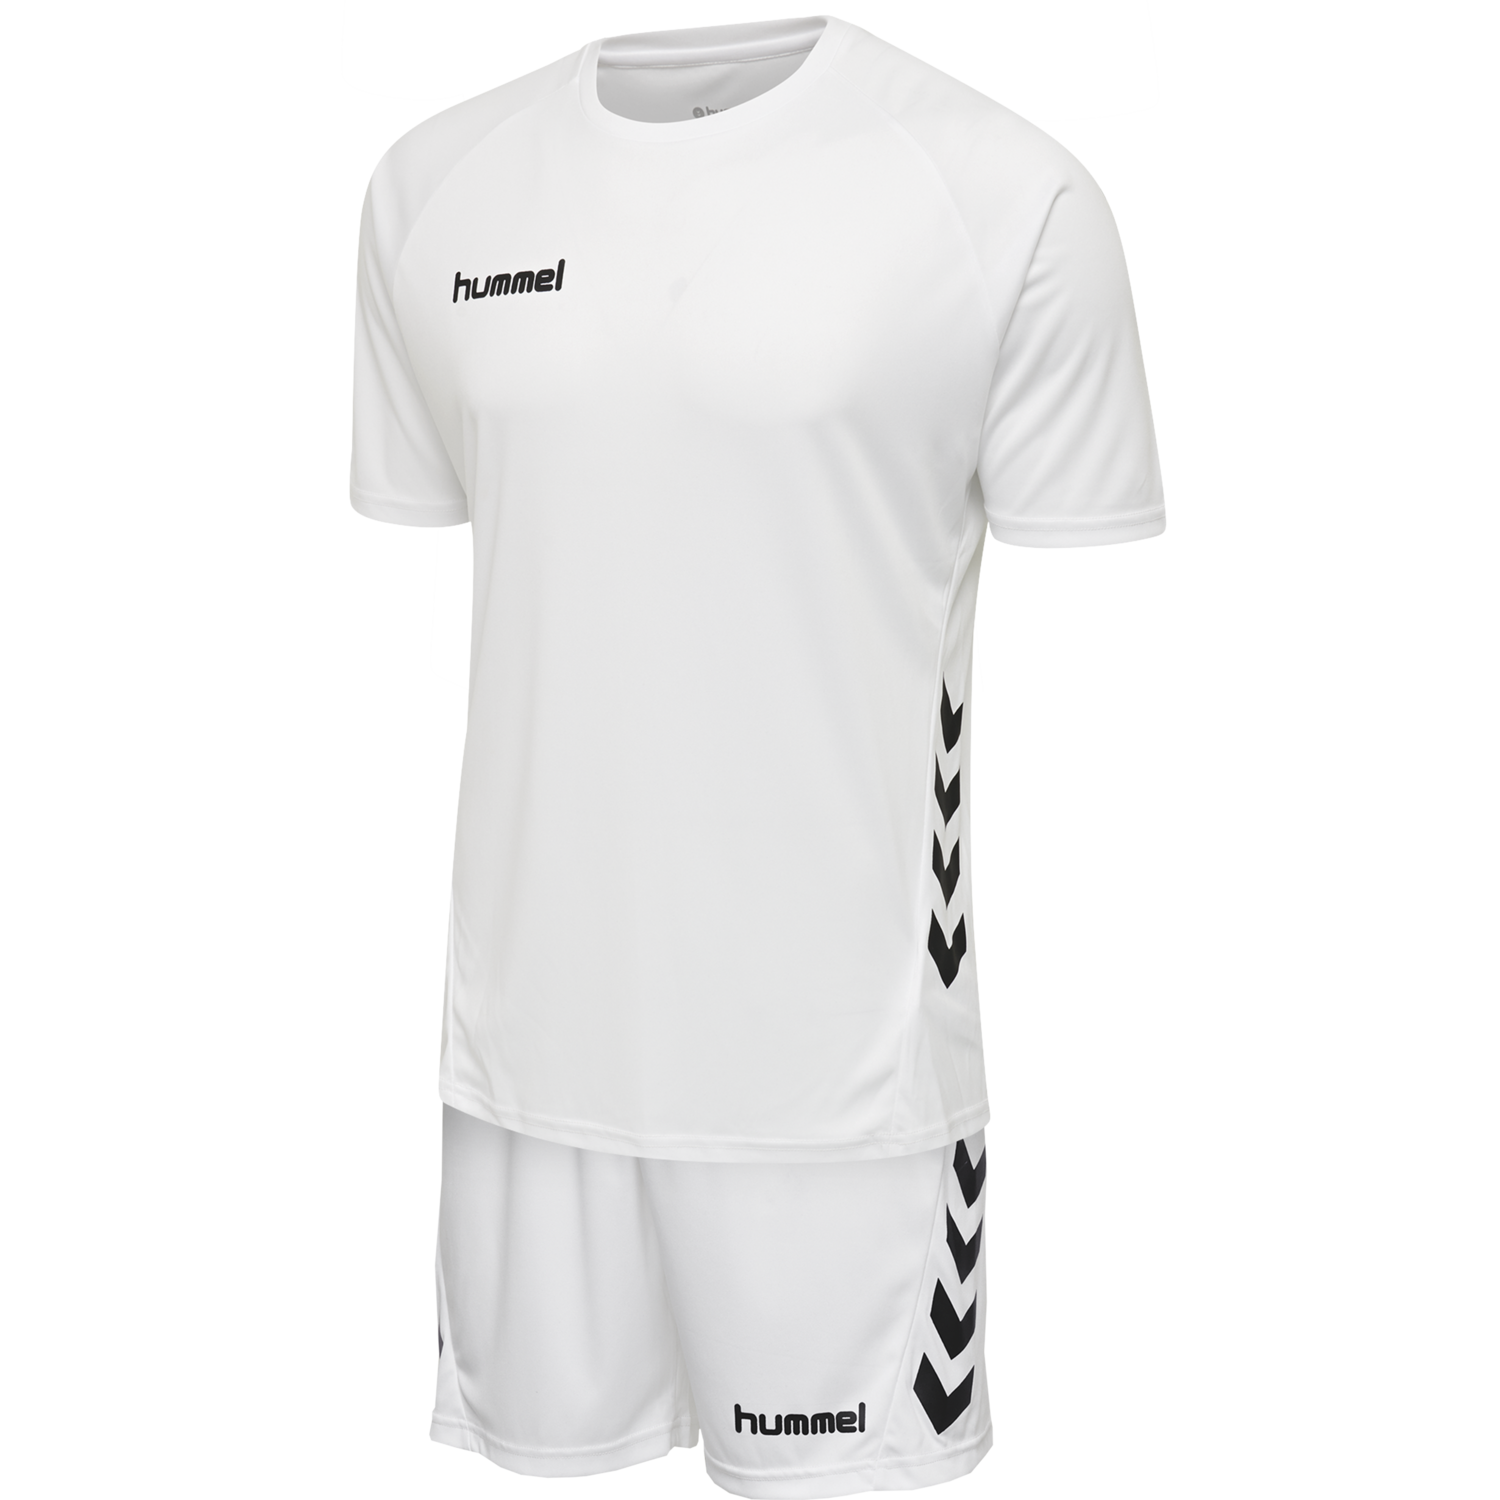 Uhlsport Mens Football Soccer Full Set Kit Short Sleeve Jersey Shirt Top Shorts 